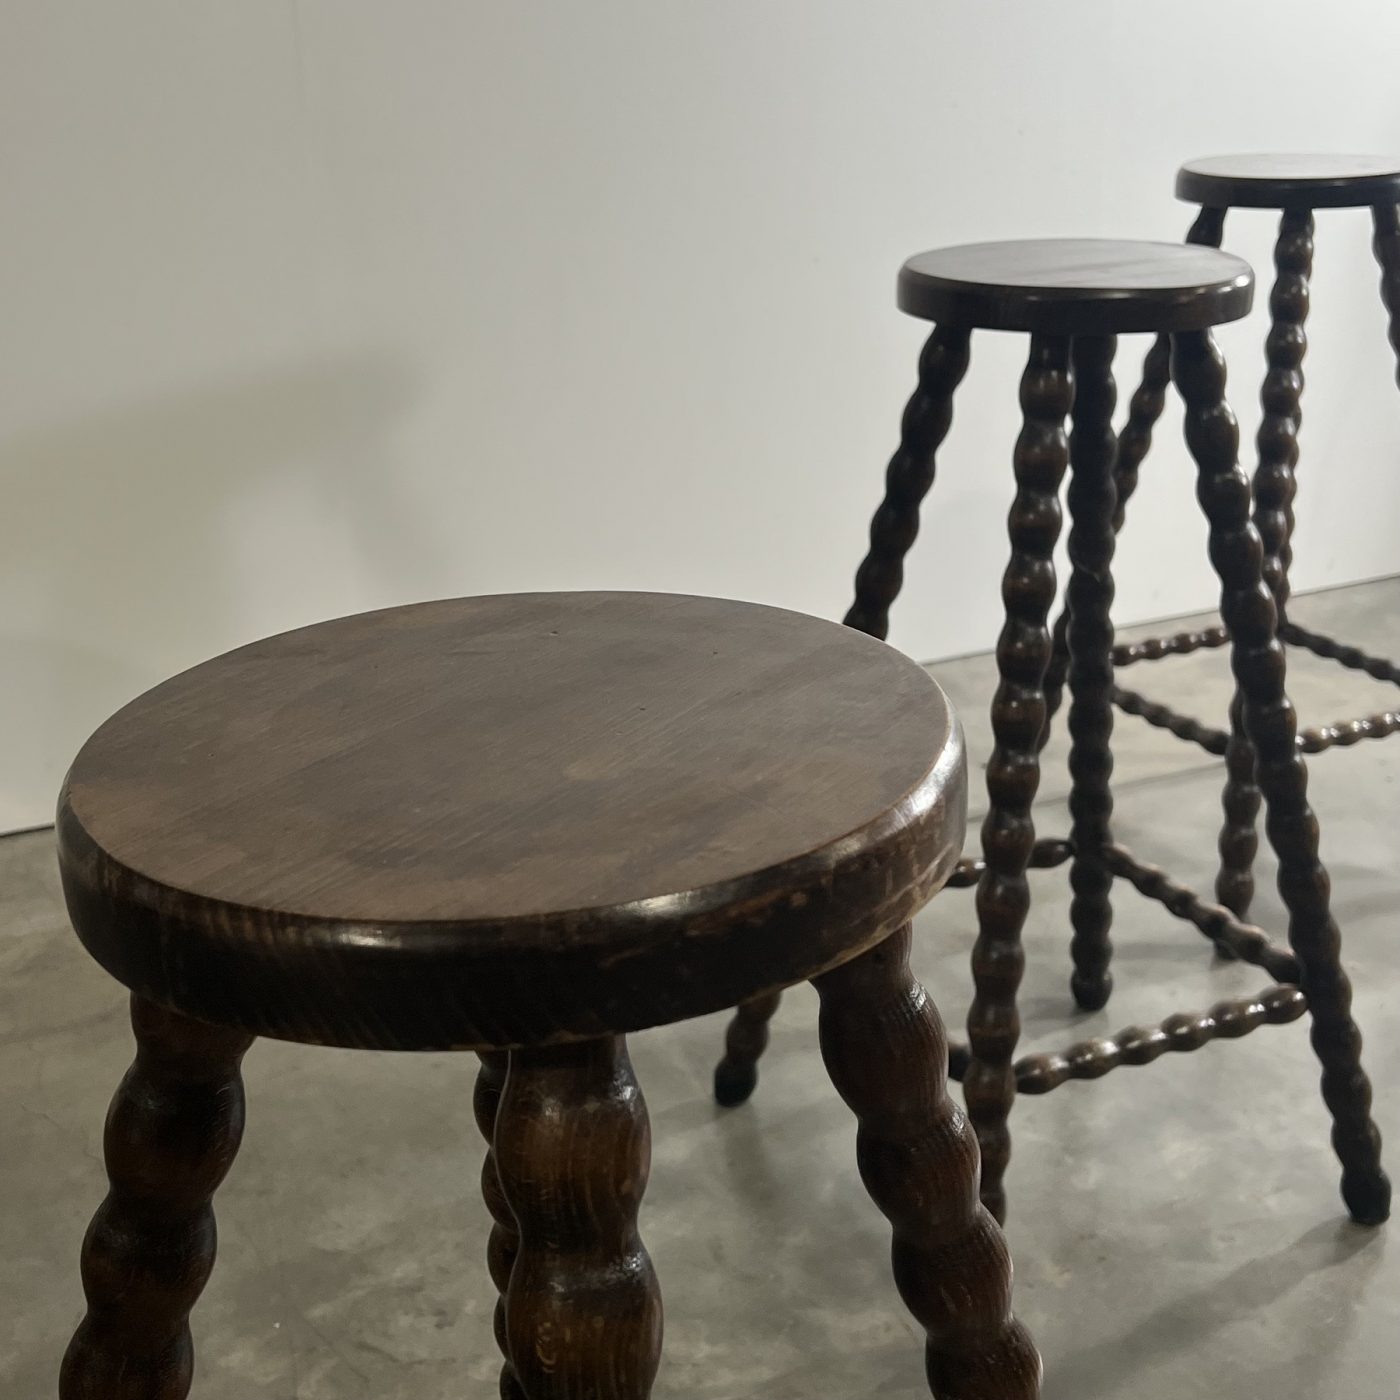 objet-vagabond-high-stools0004